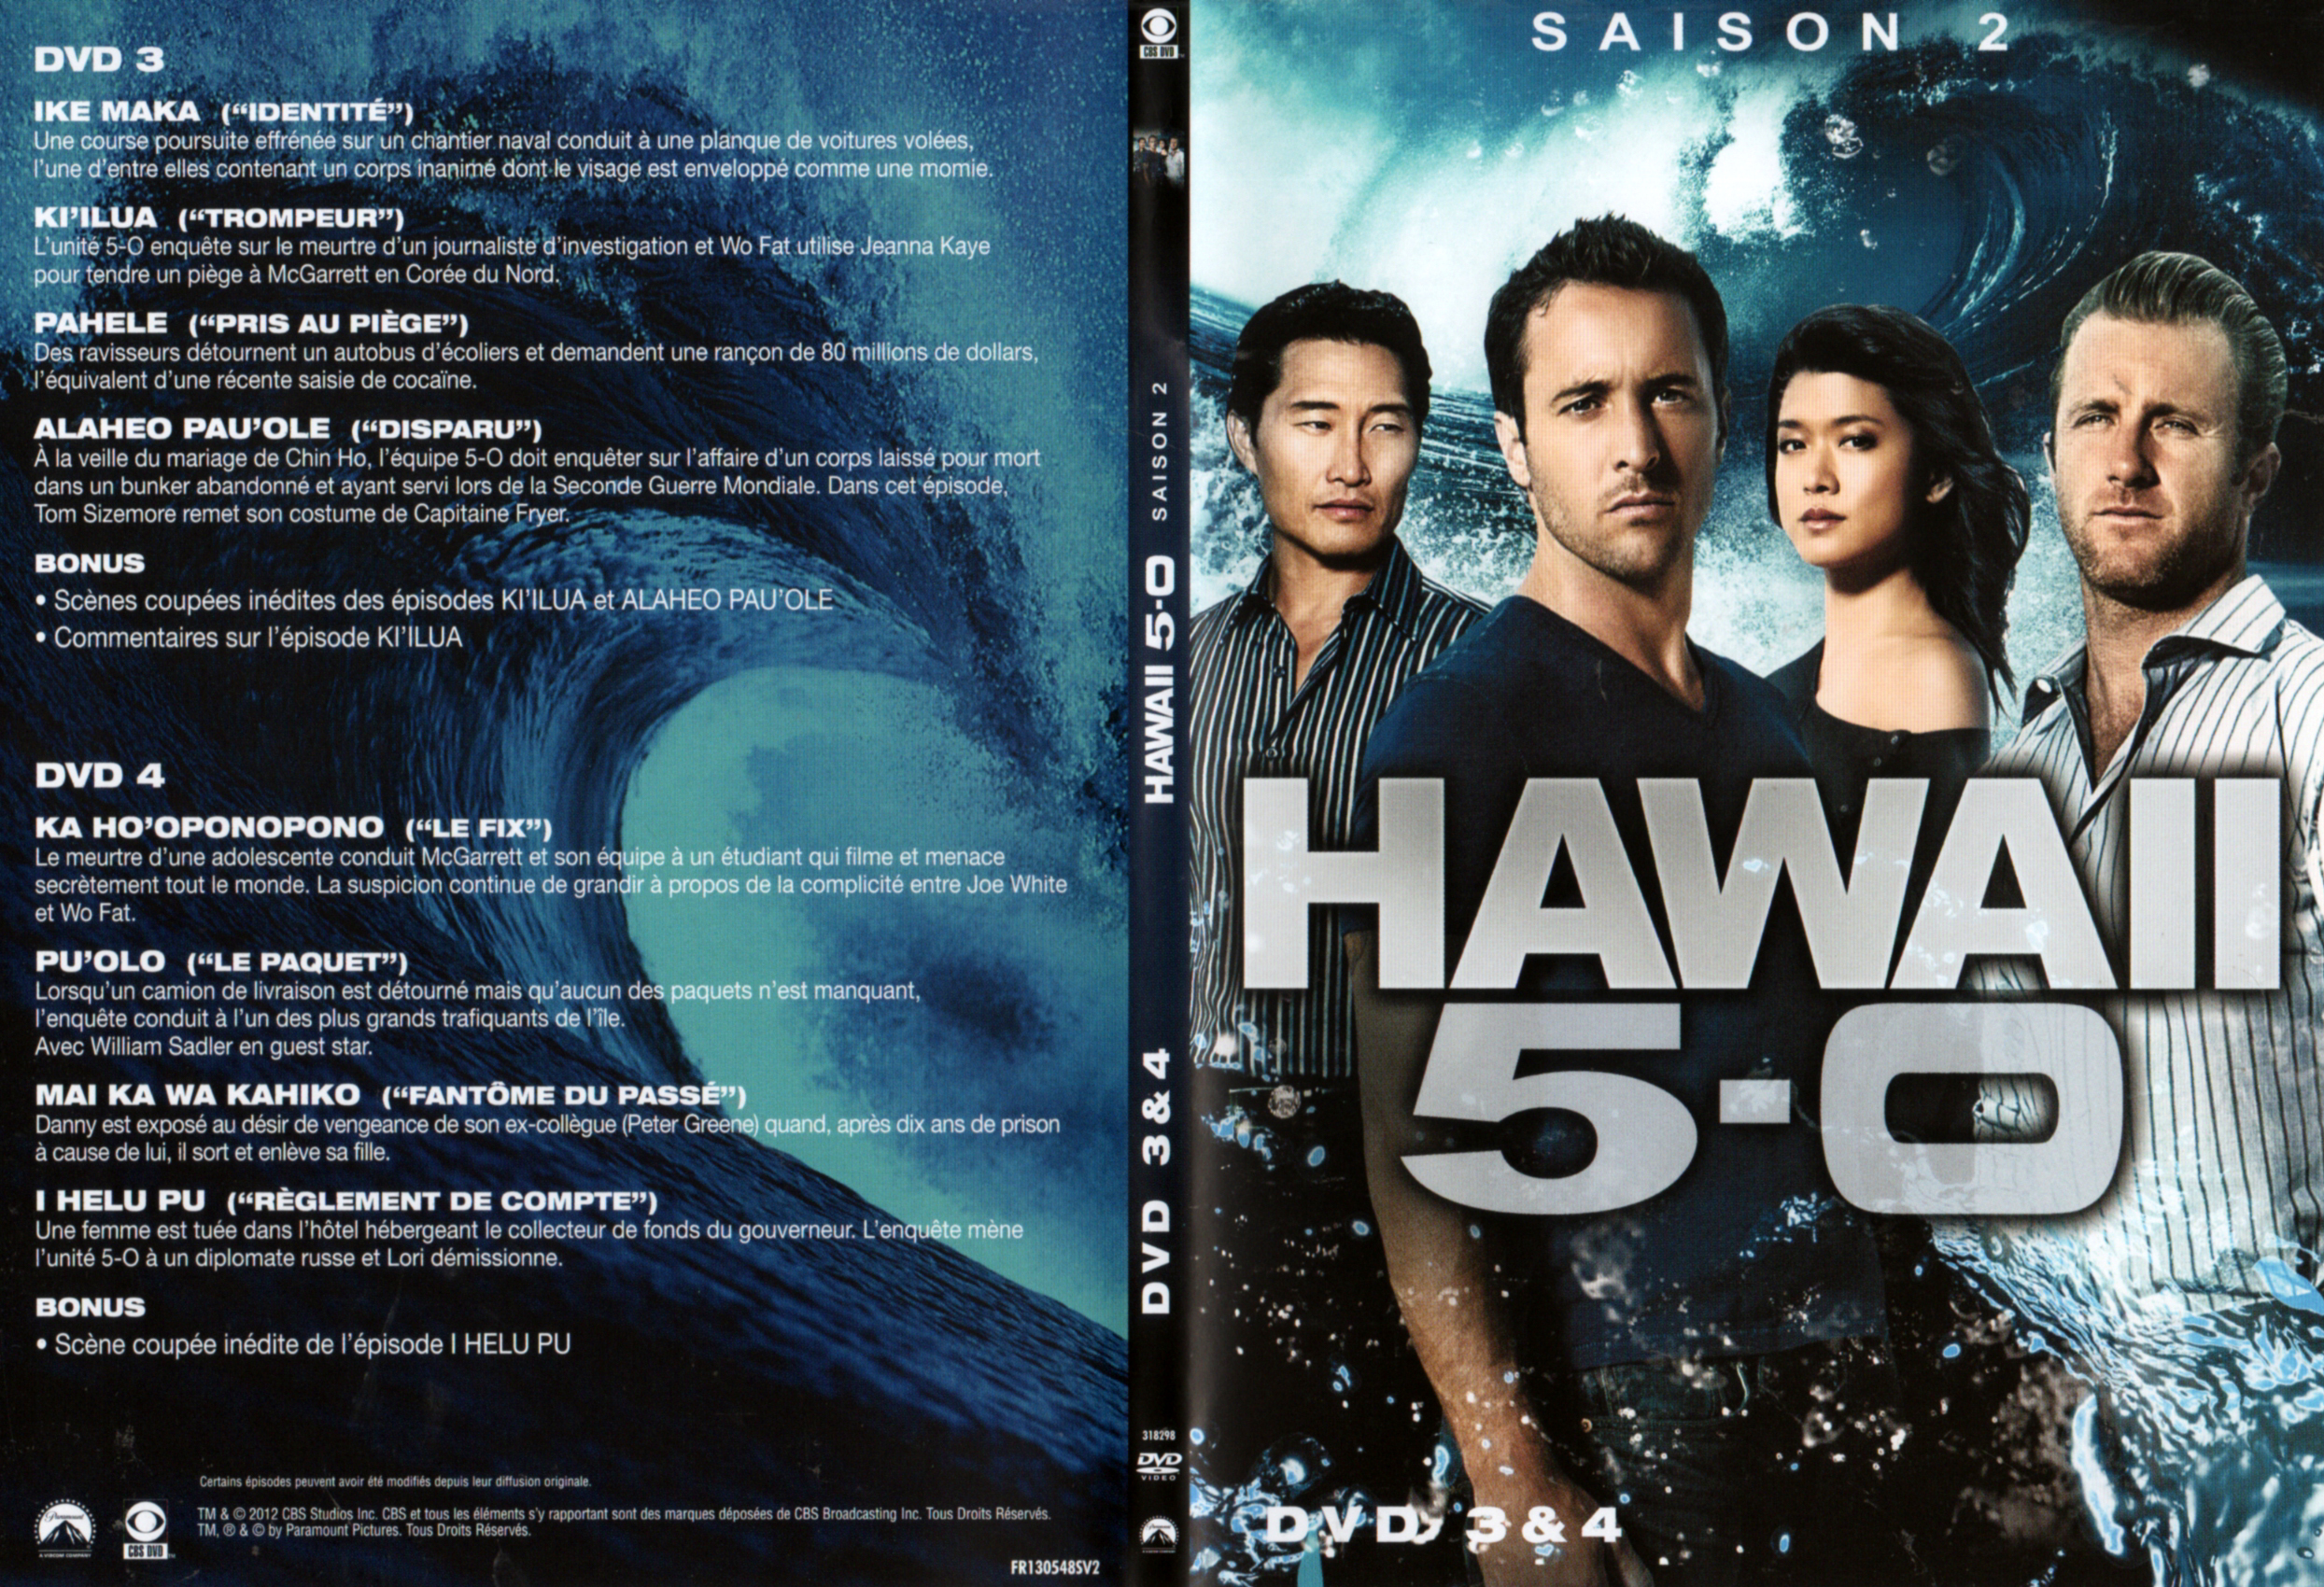 Jaquette DVD Hawaii Five-O Saison 2 DISC 2